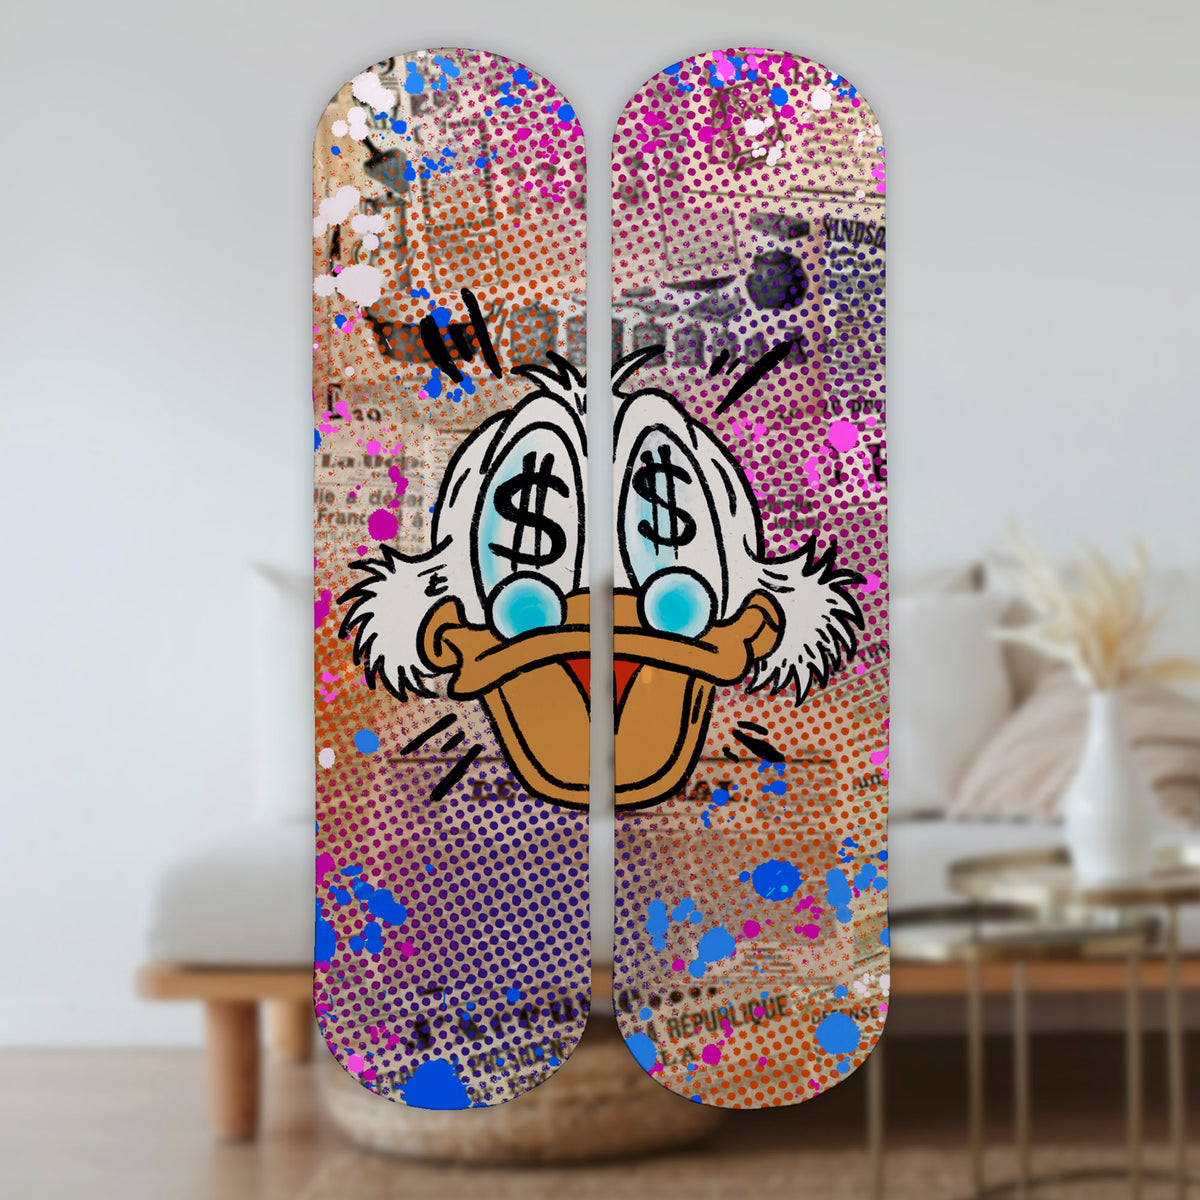 2-Piece Wall Art of Duck Skateboard Design in Acrylic Glass - Retro